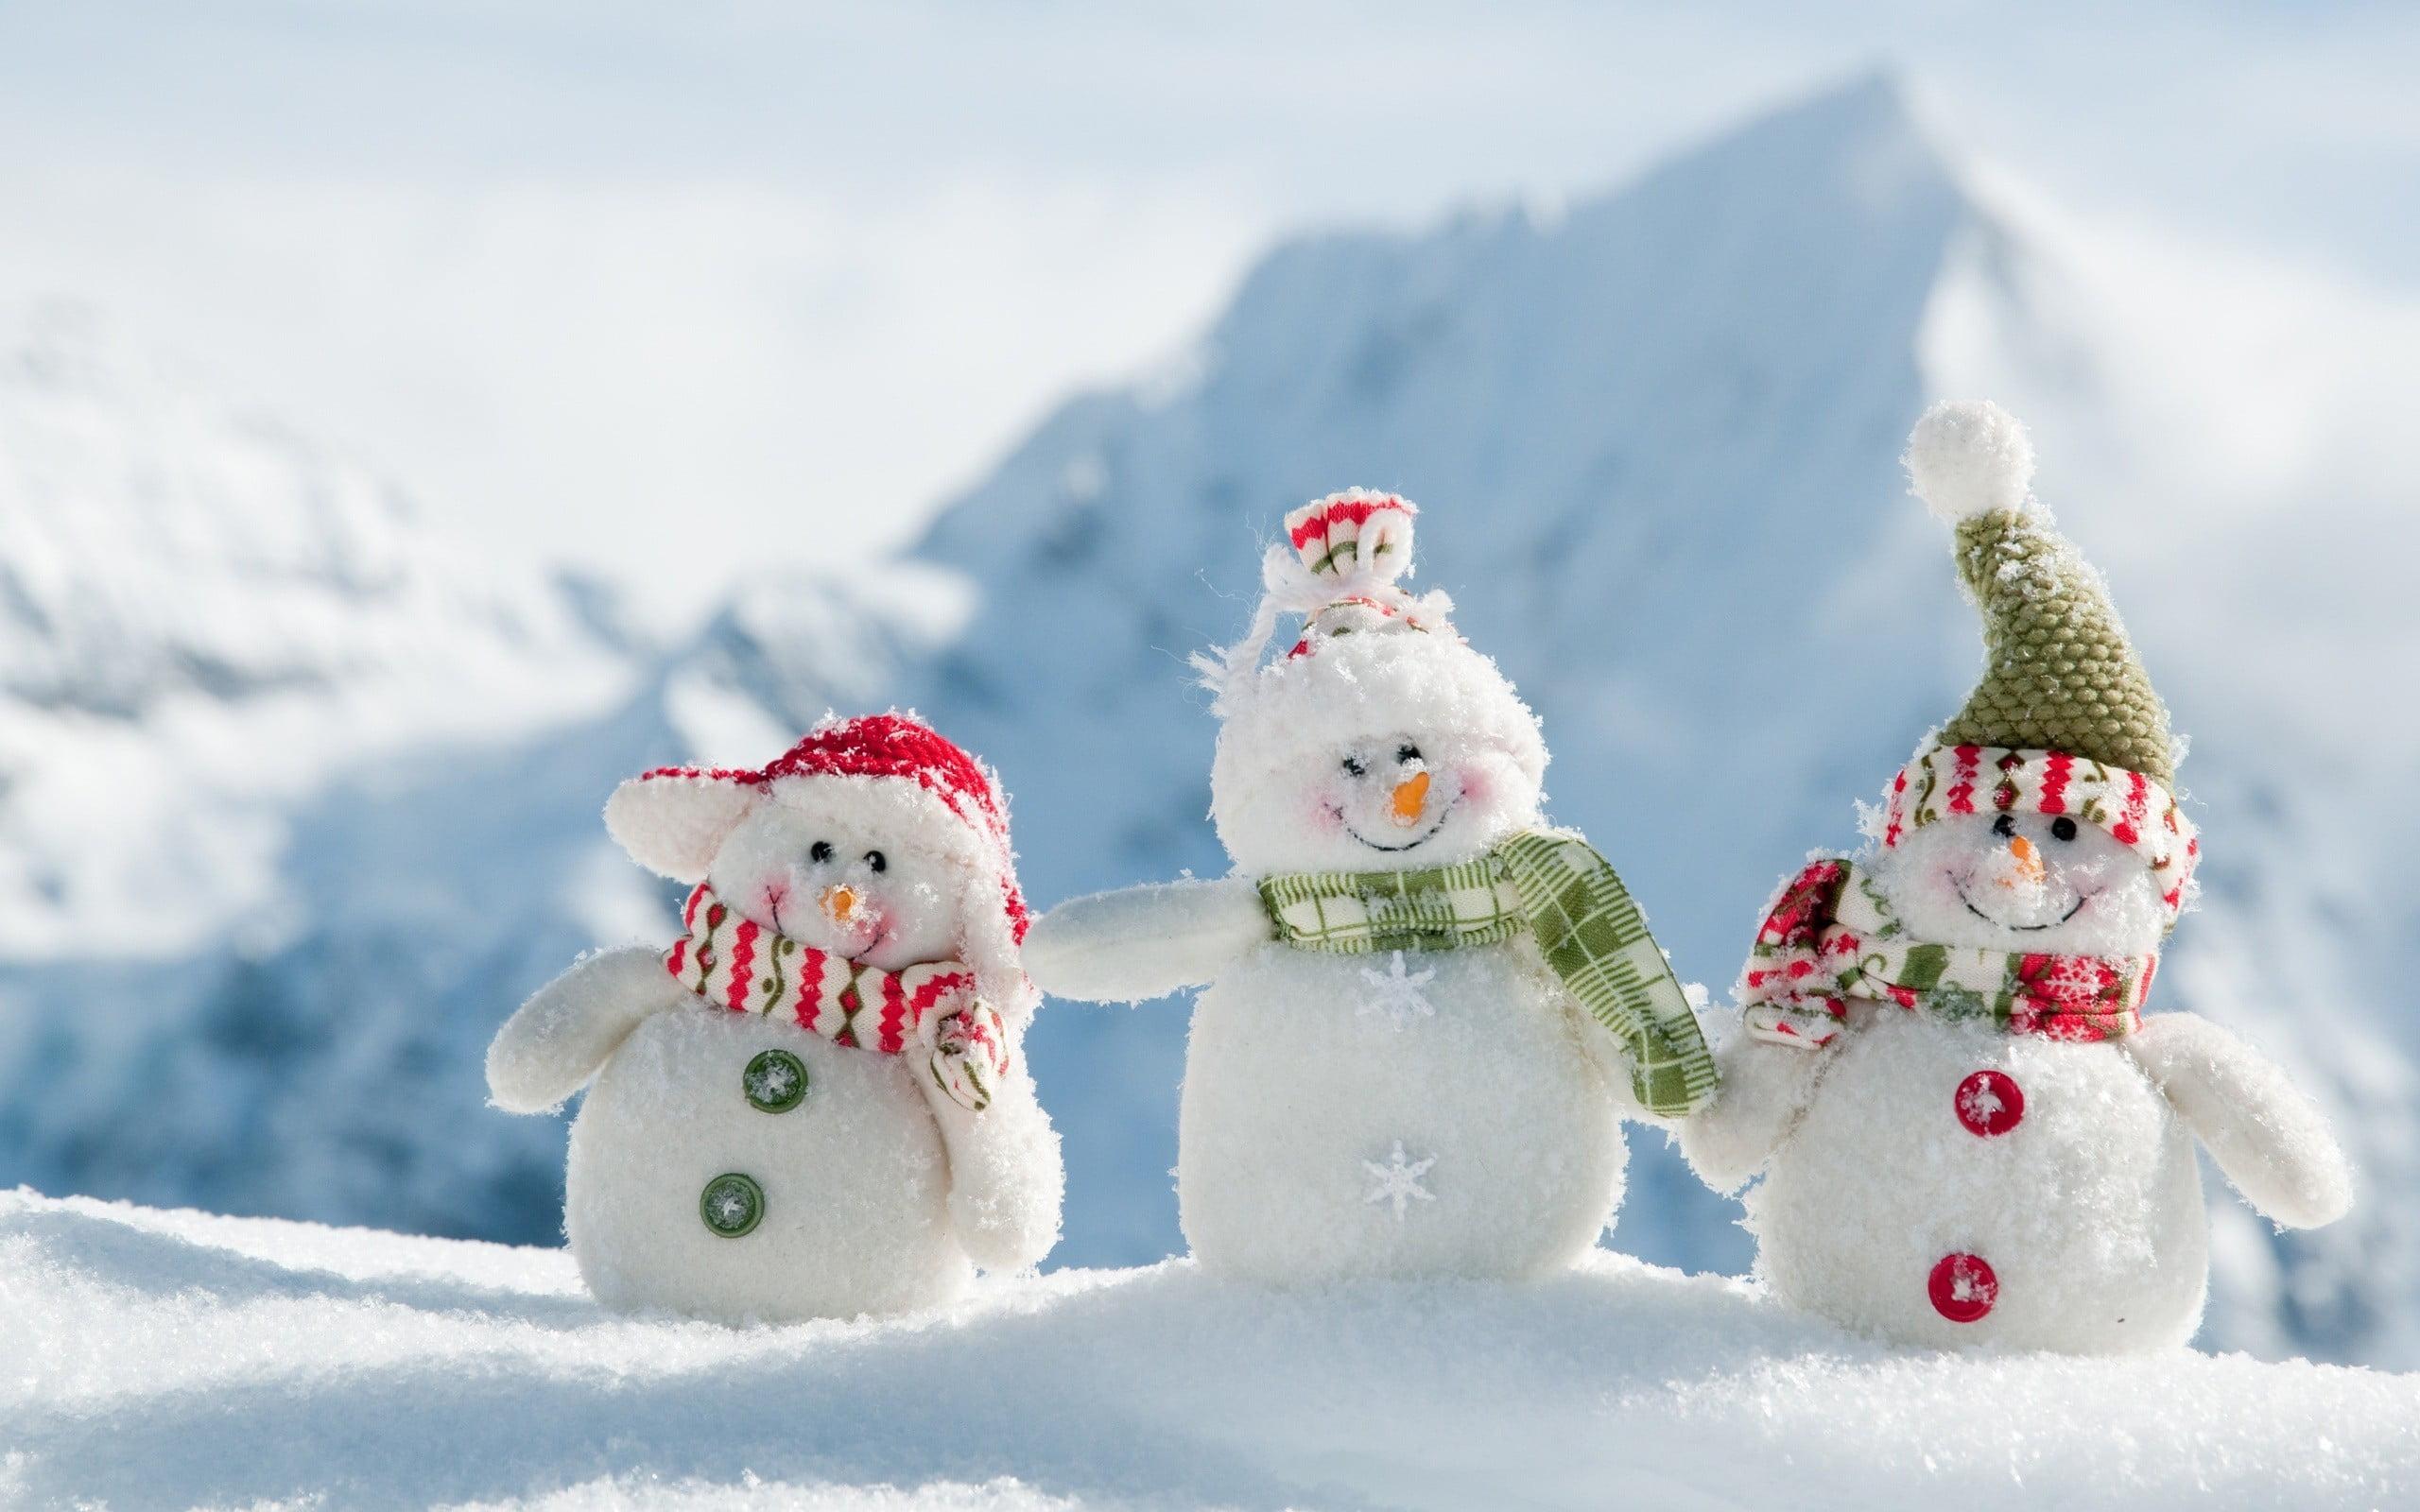 Three snowman figurines, snowmen, snow, depth of field